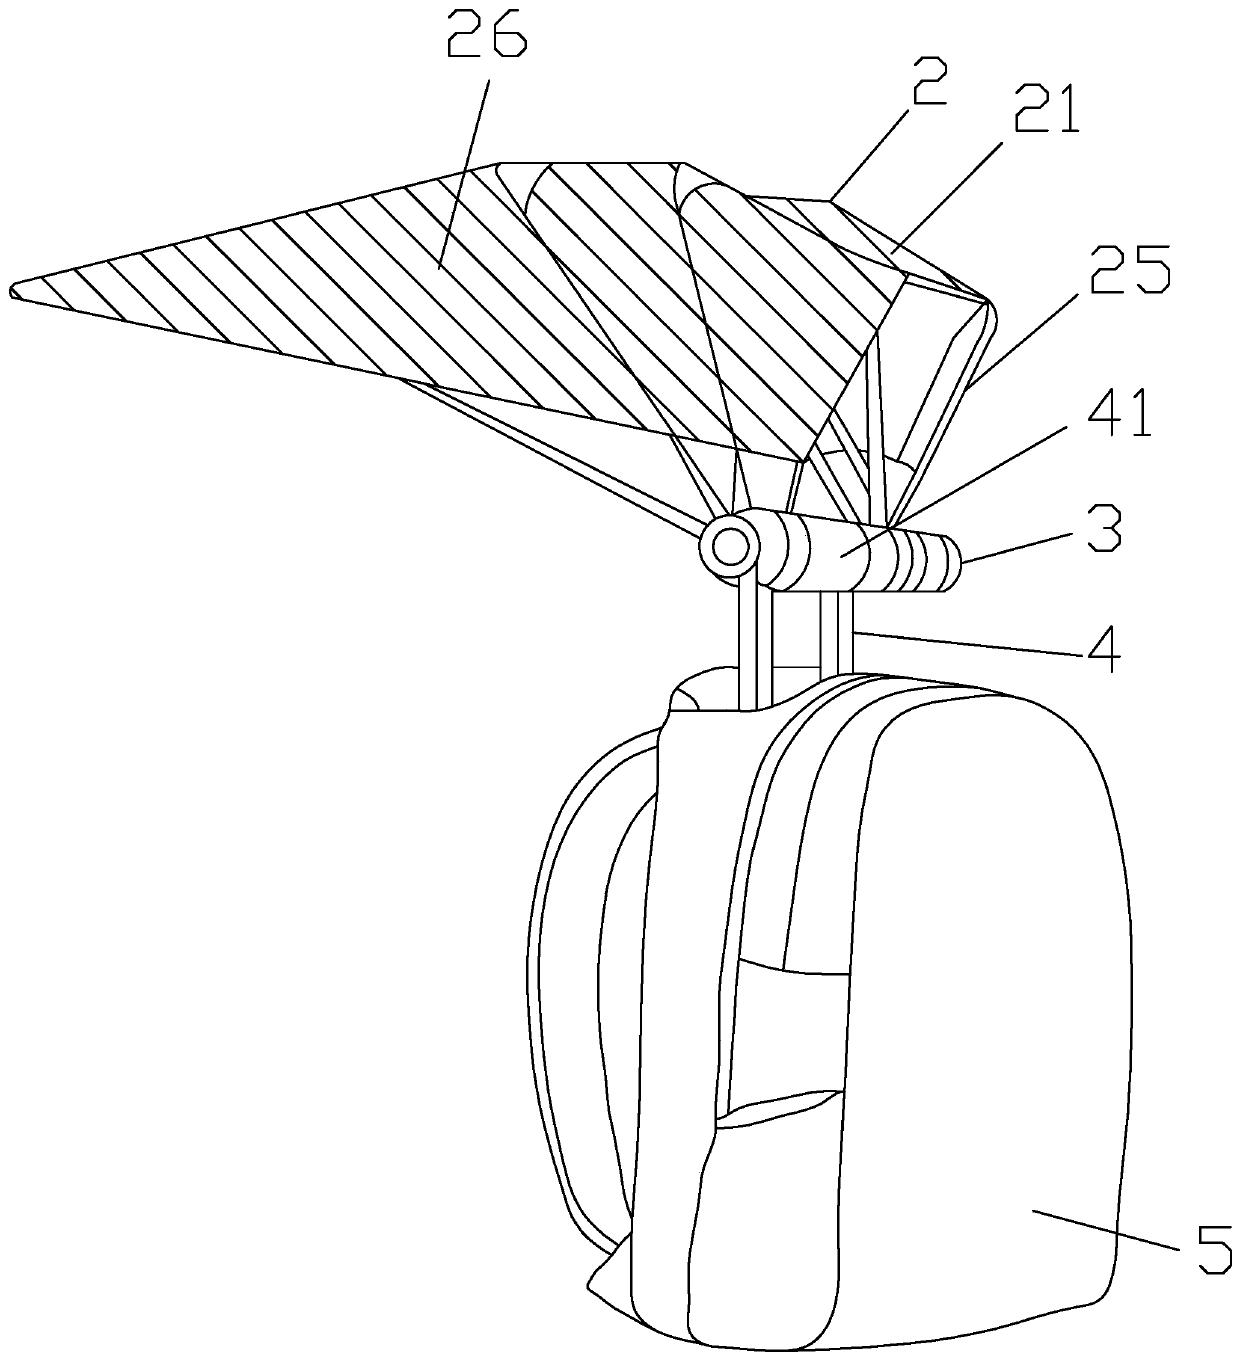 A multifunctional backpack umbrella